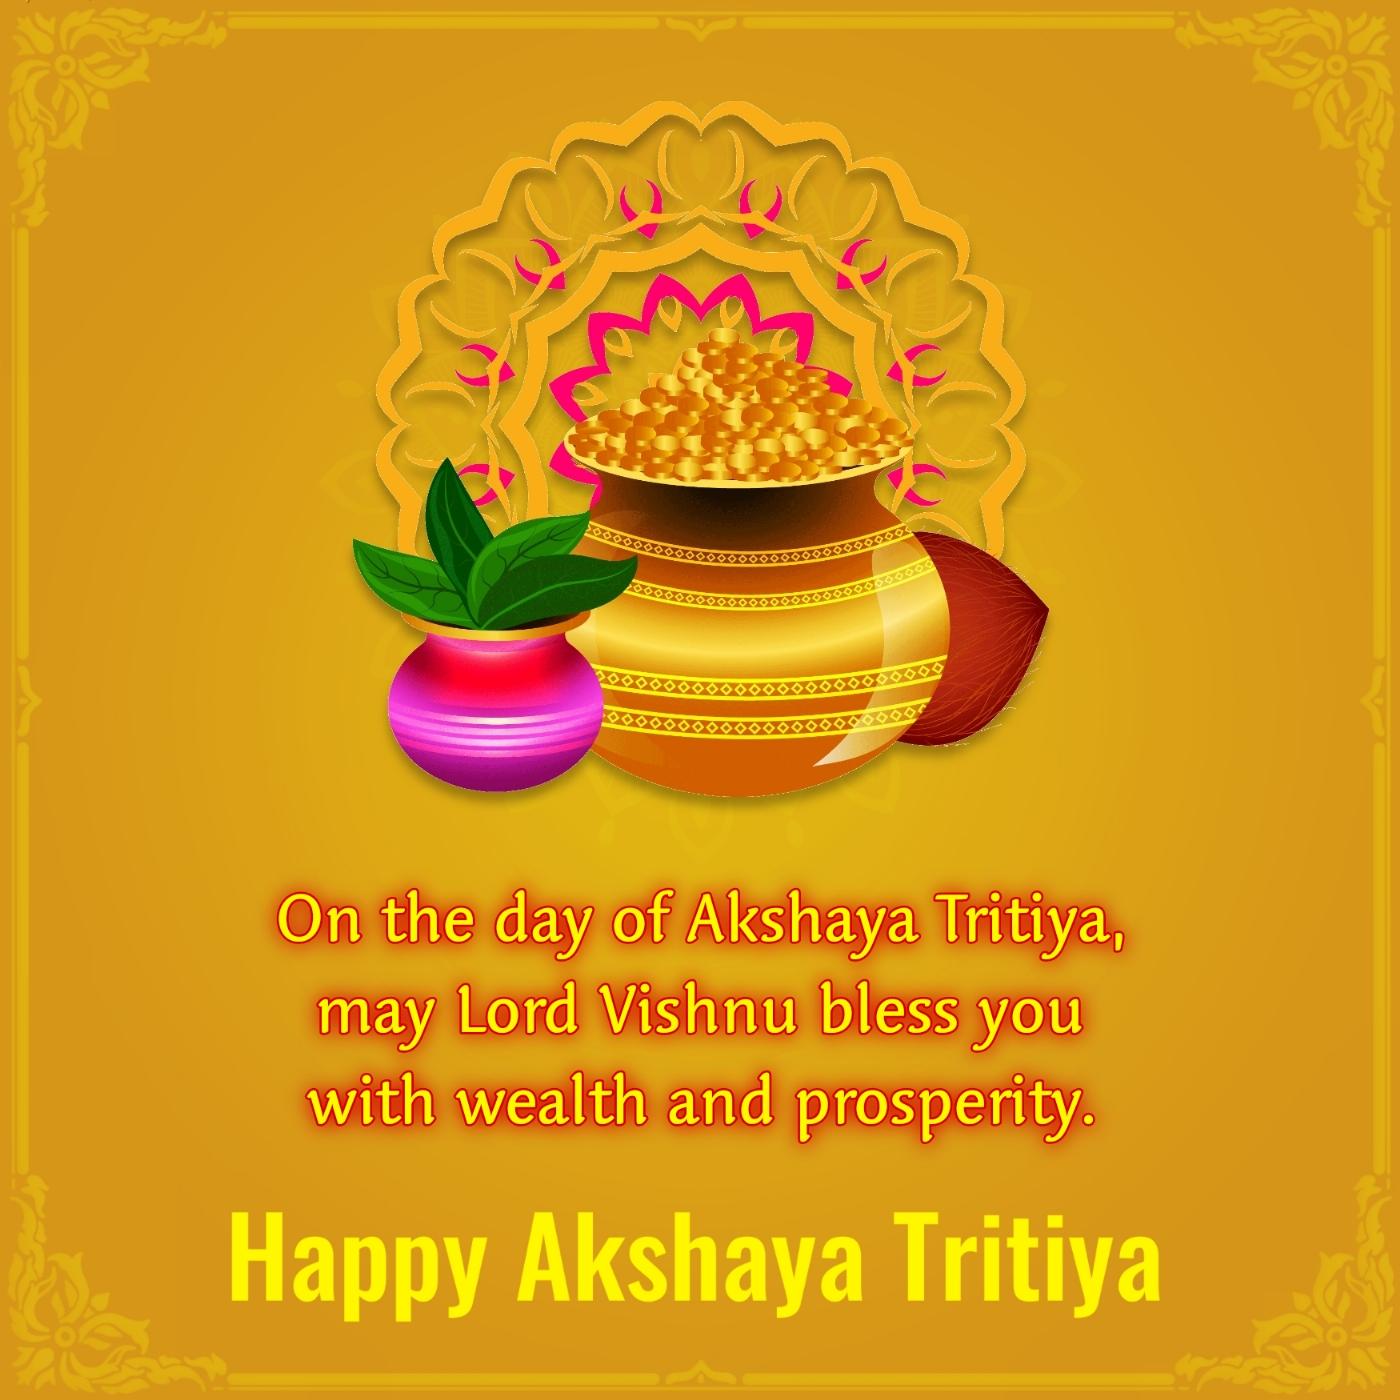 On the day of Akshaya Tritiya may Lord Vishnu bless you